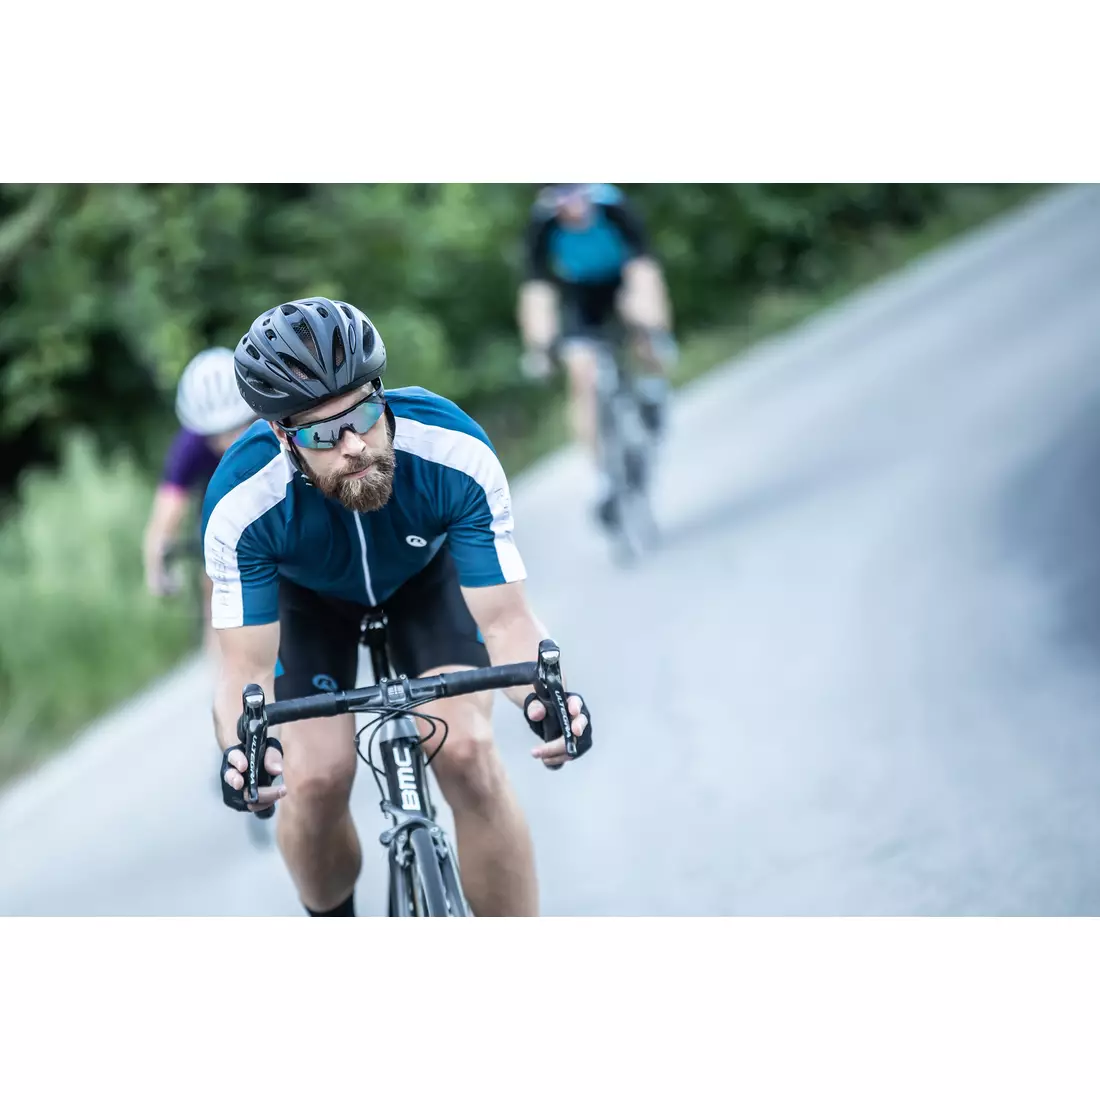 ROGELLI EXPLORE pánsky cyklistický dres, Modrá